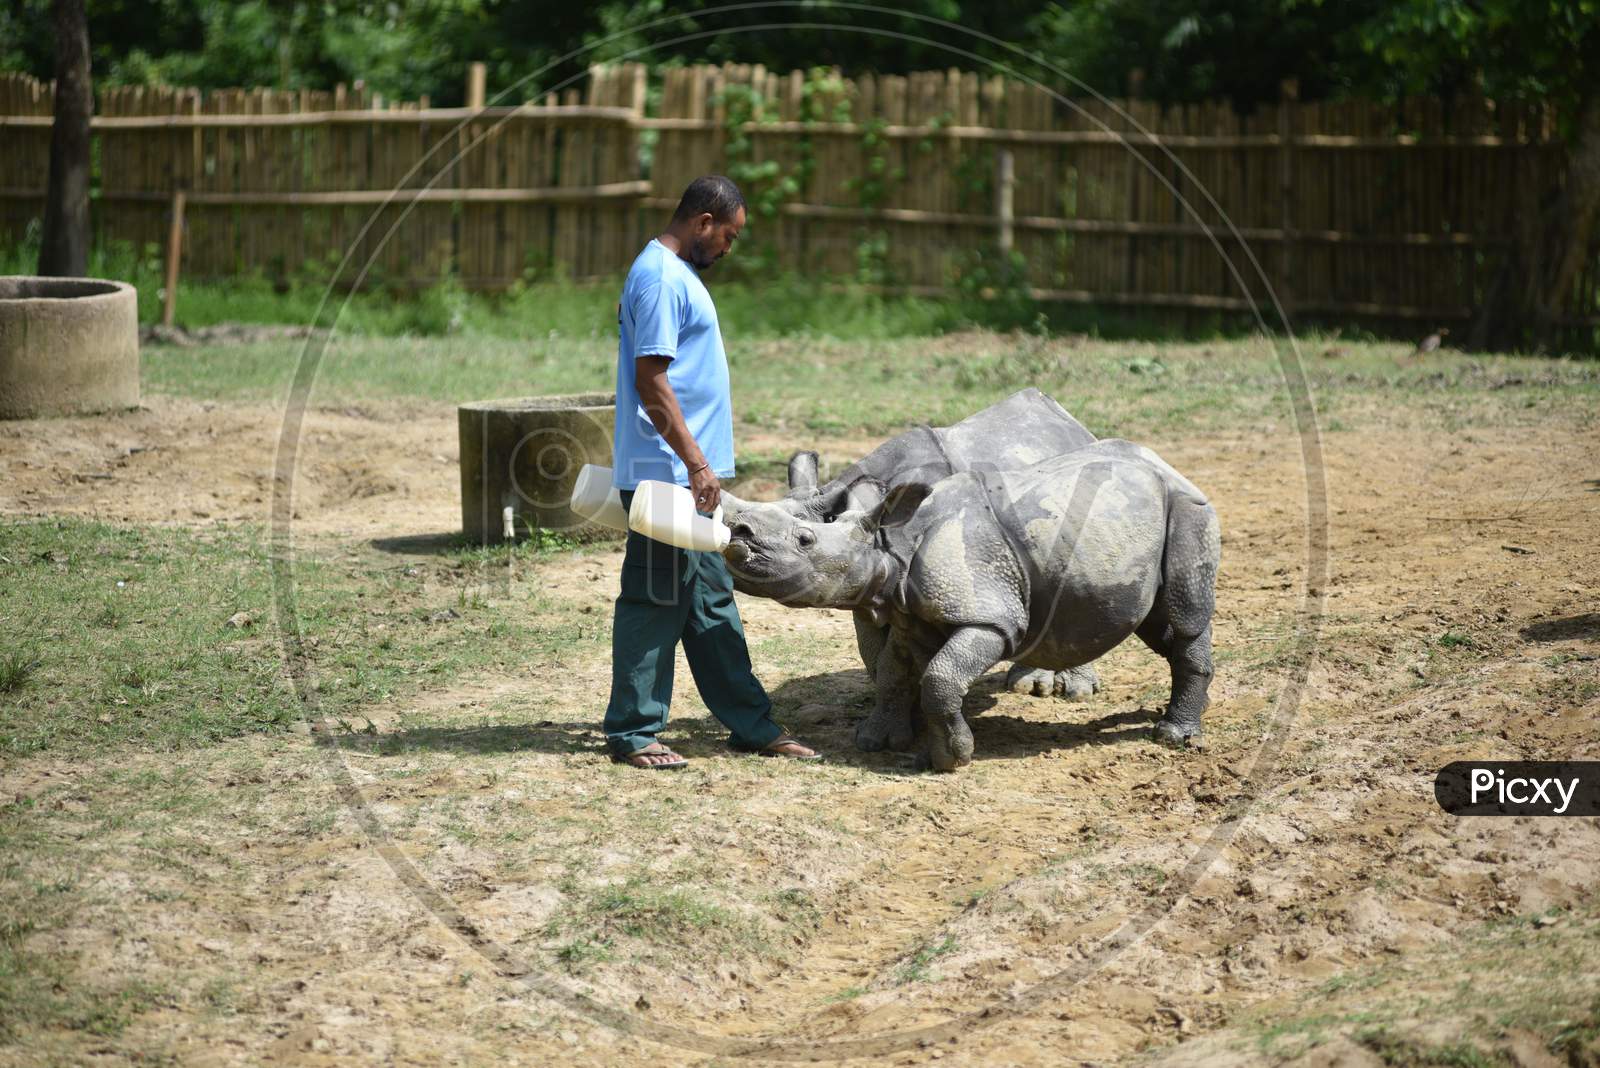 Caretakers Feeding White Rhinoceros Baby in Kaziranga National Park